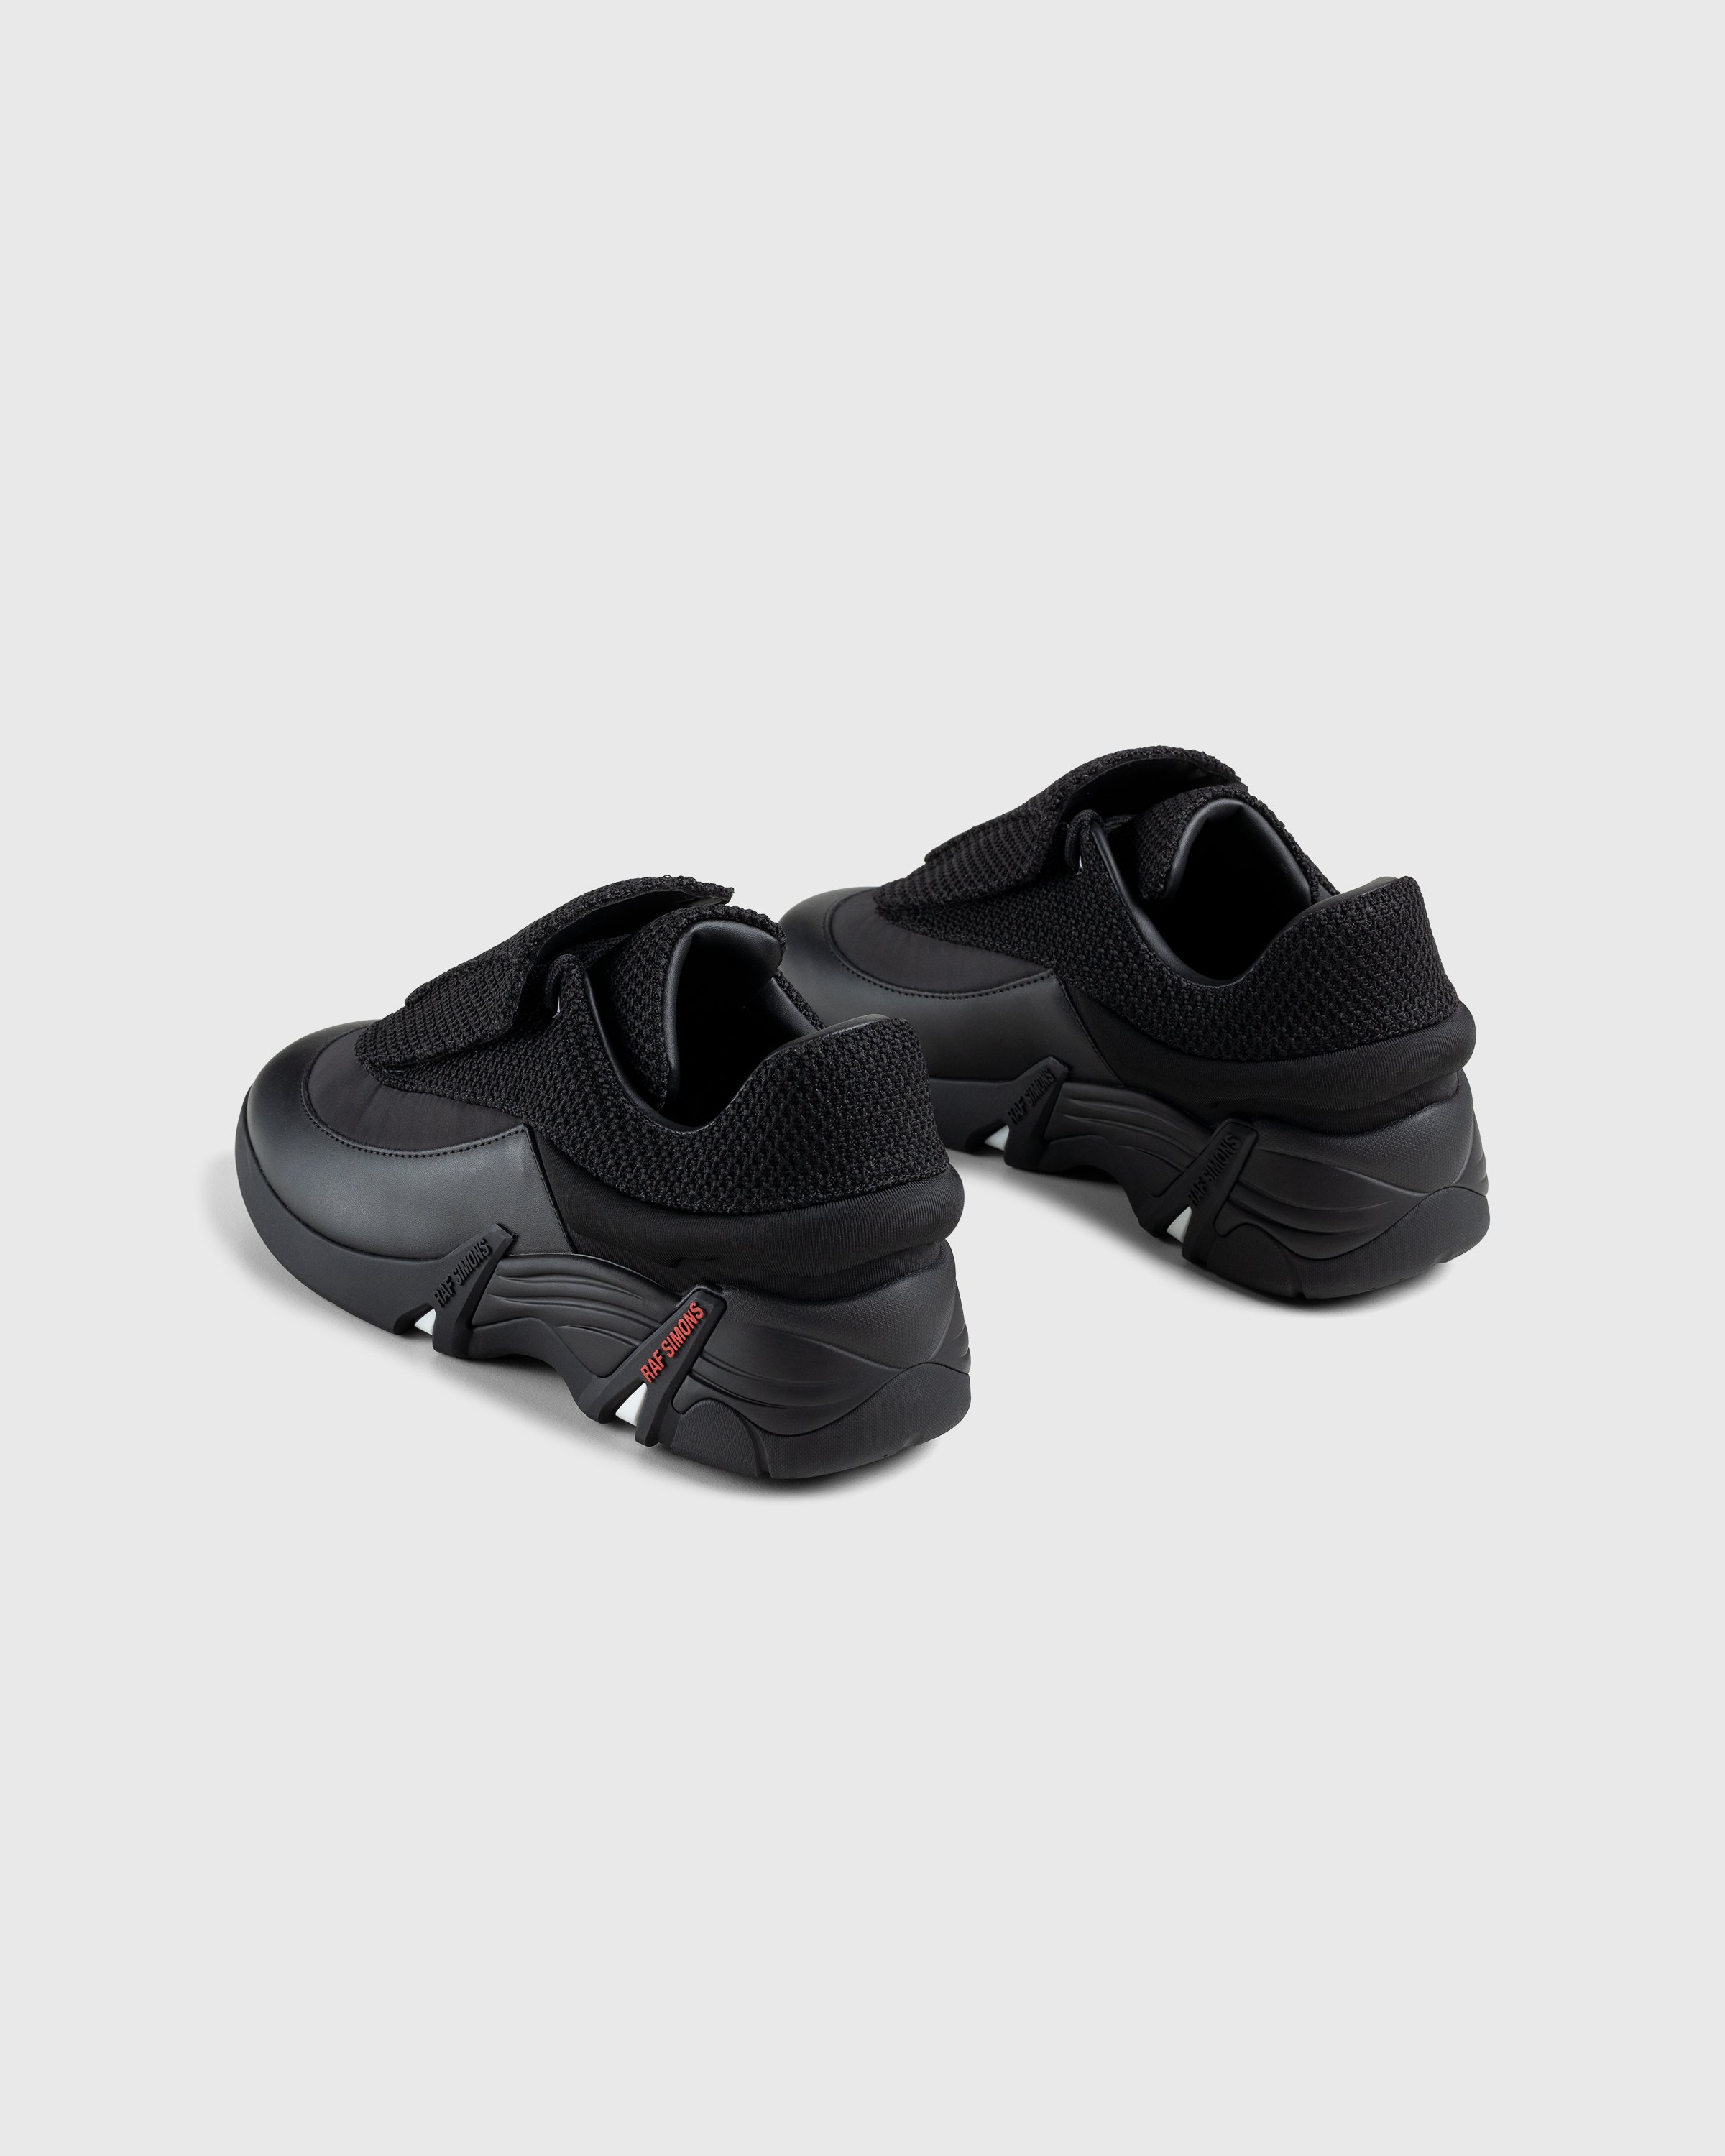 Raf Simons - Antei Black - Footwear - Black - Image 4